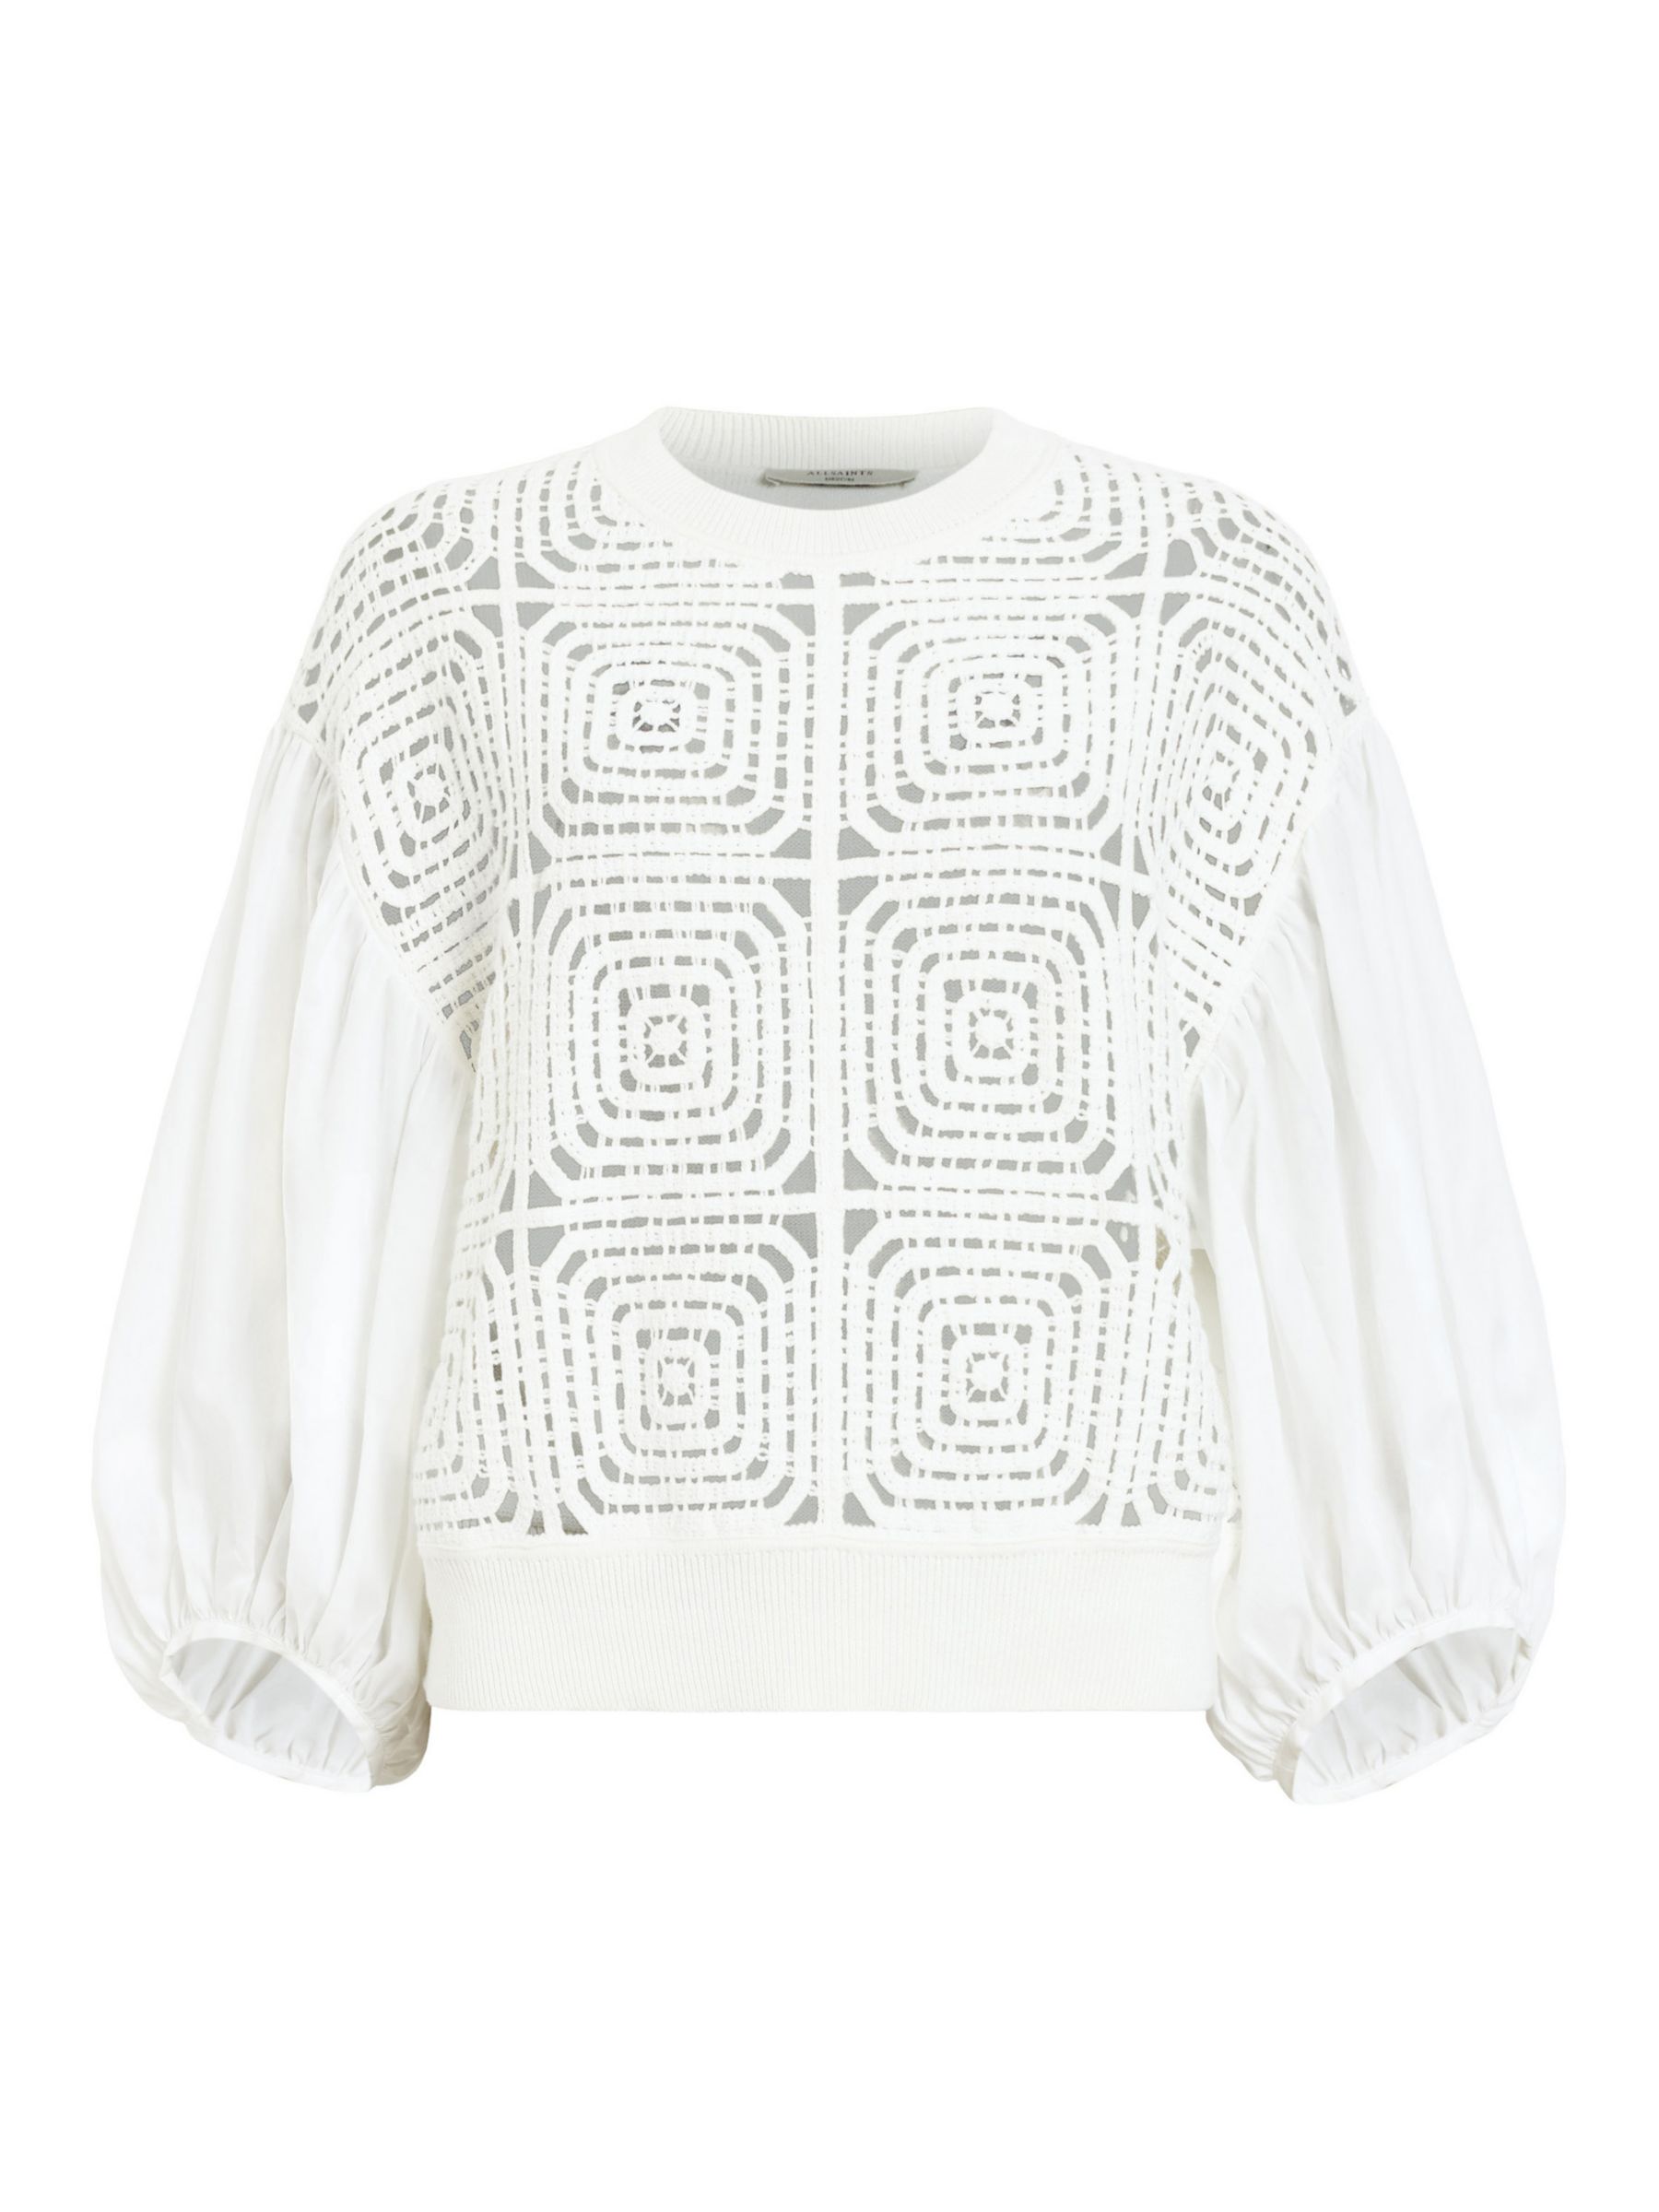 AllSaints Sol Organic Cotton Geometric Embroidered Jumper, Chalk White, L